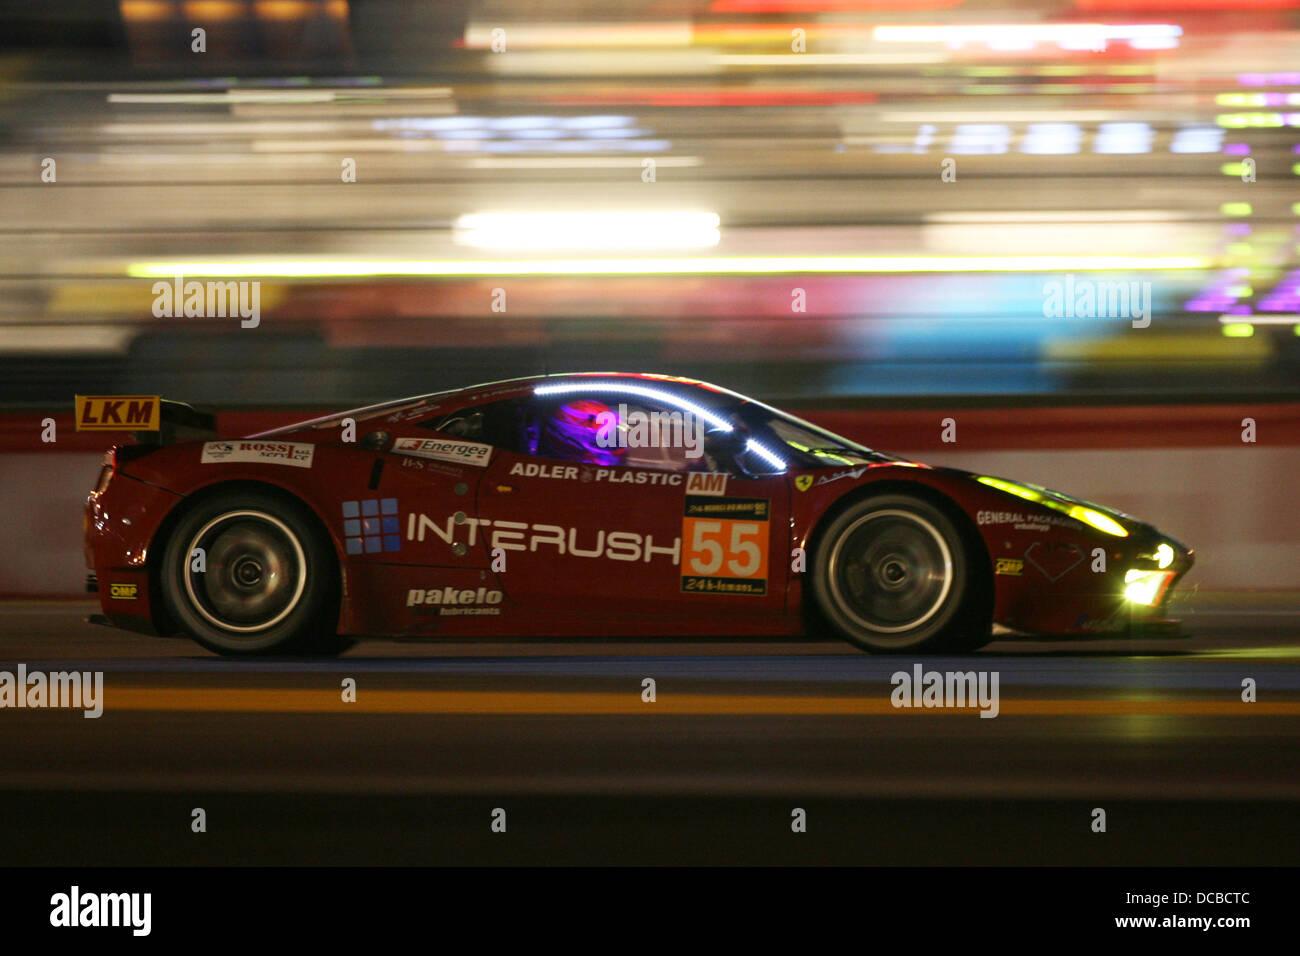 Ferrari 458 at Le Mans 24 Hours, 2013 Stock Photo